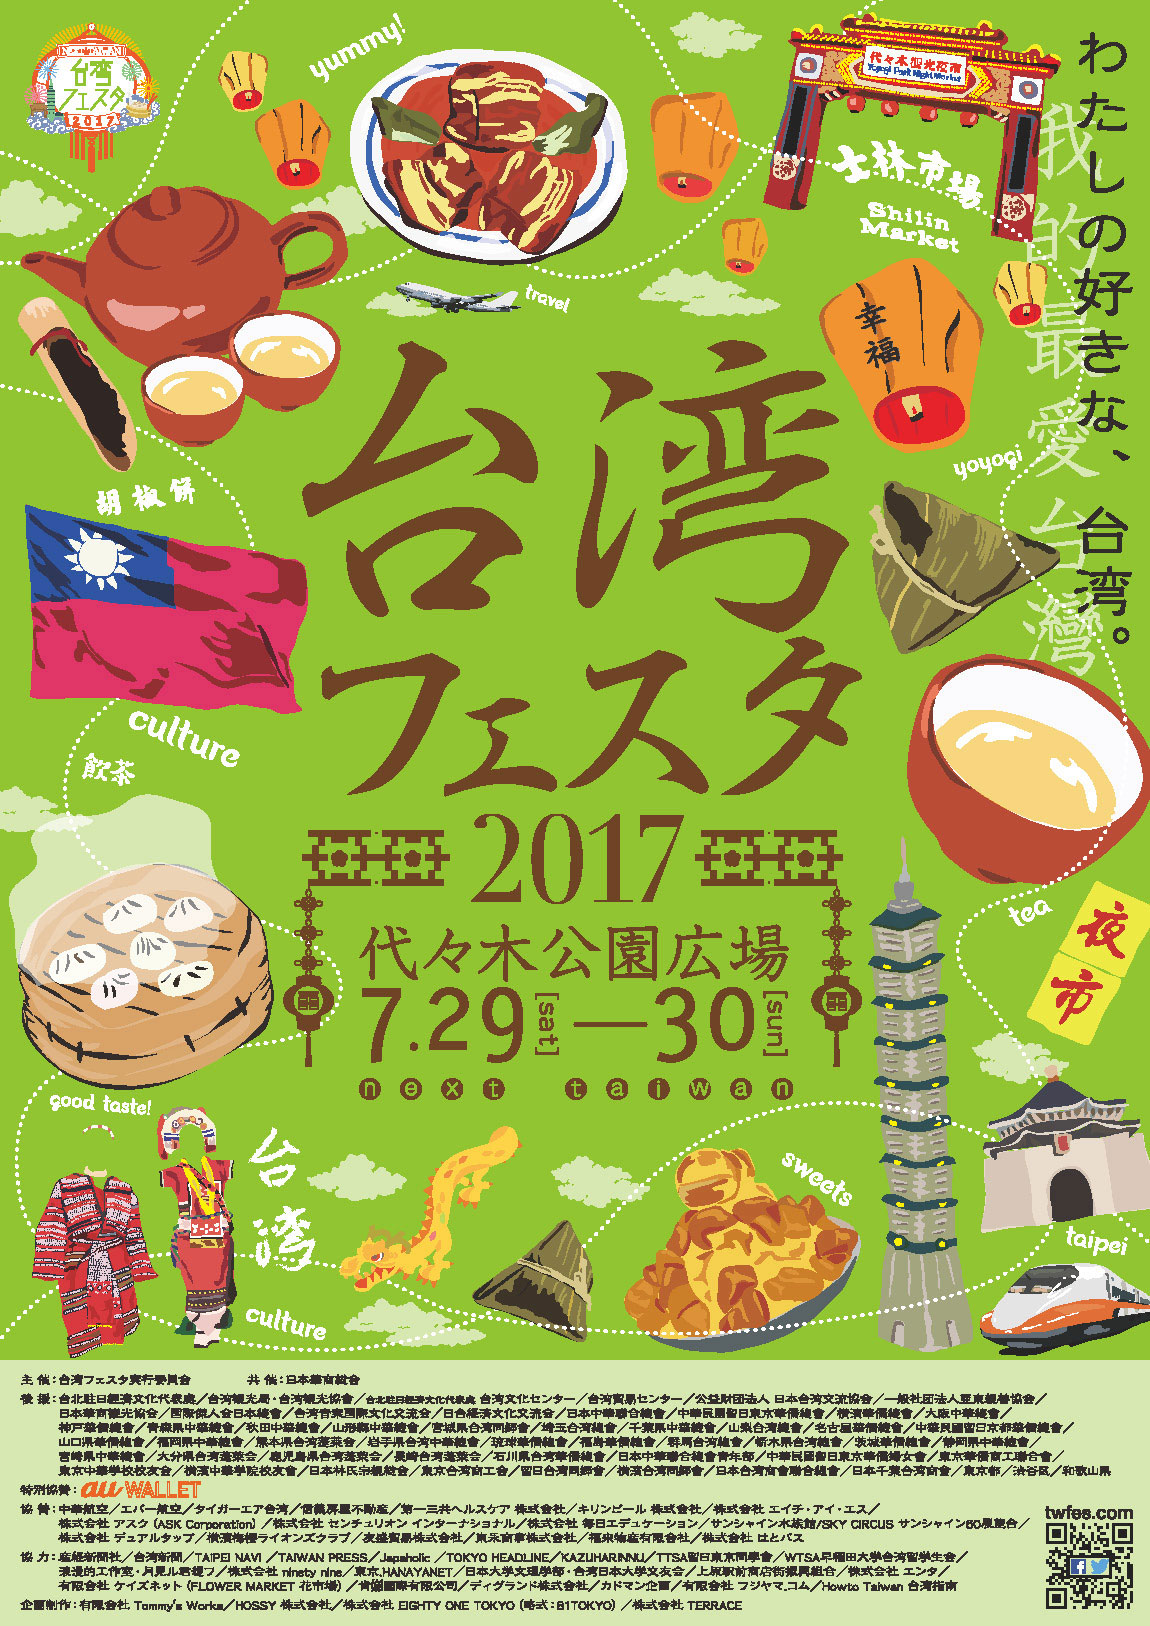 Taiwan Festa at Tokyo Yoyogi Park 2017